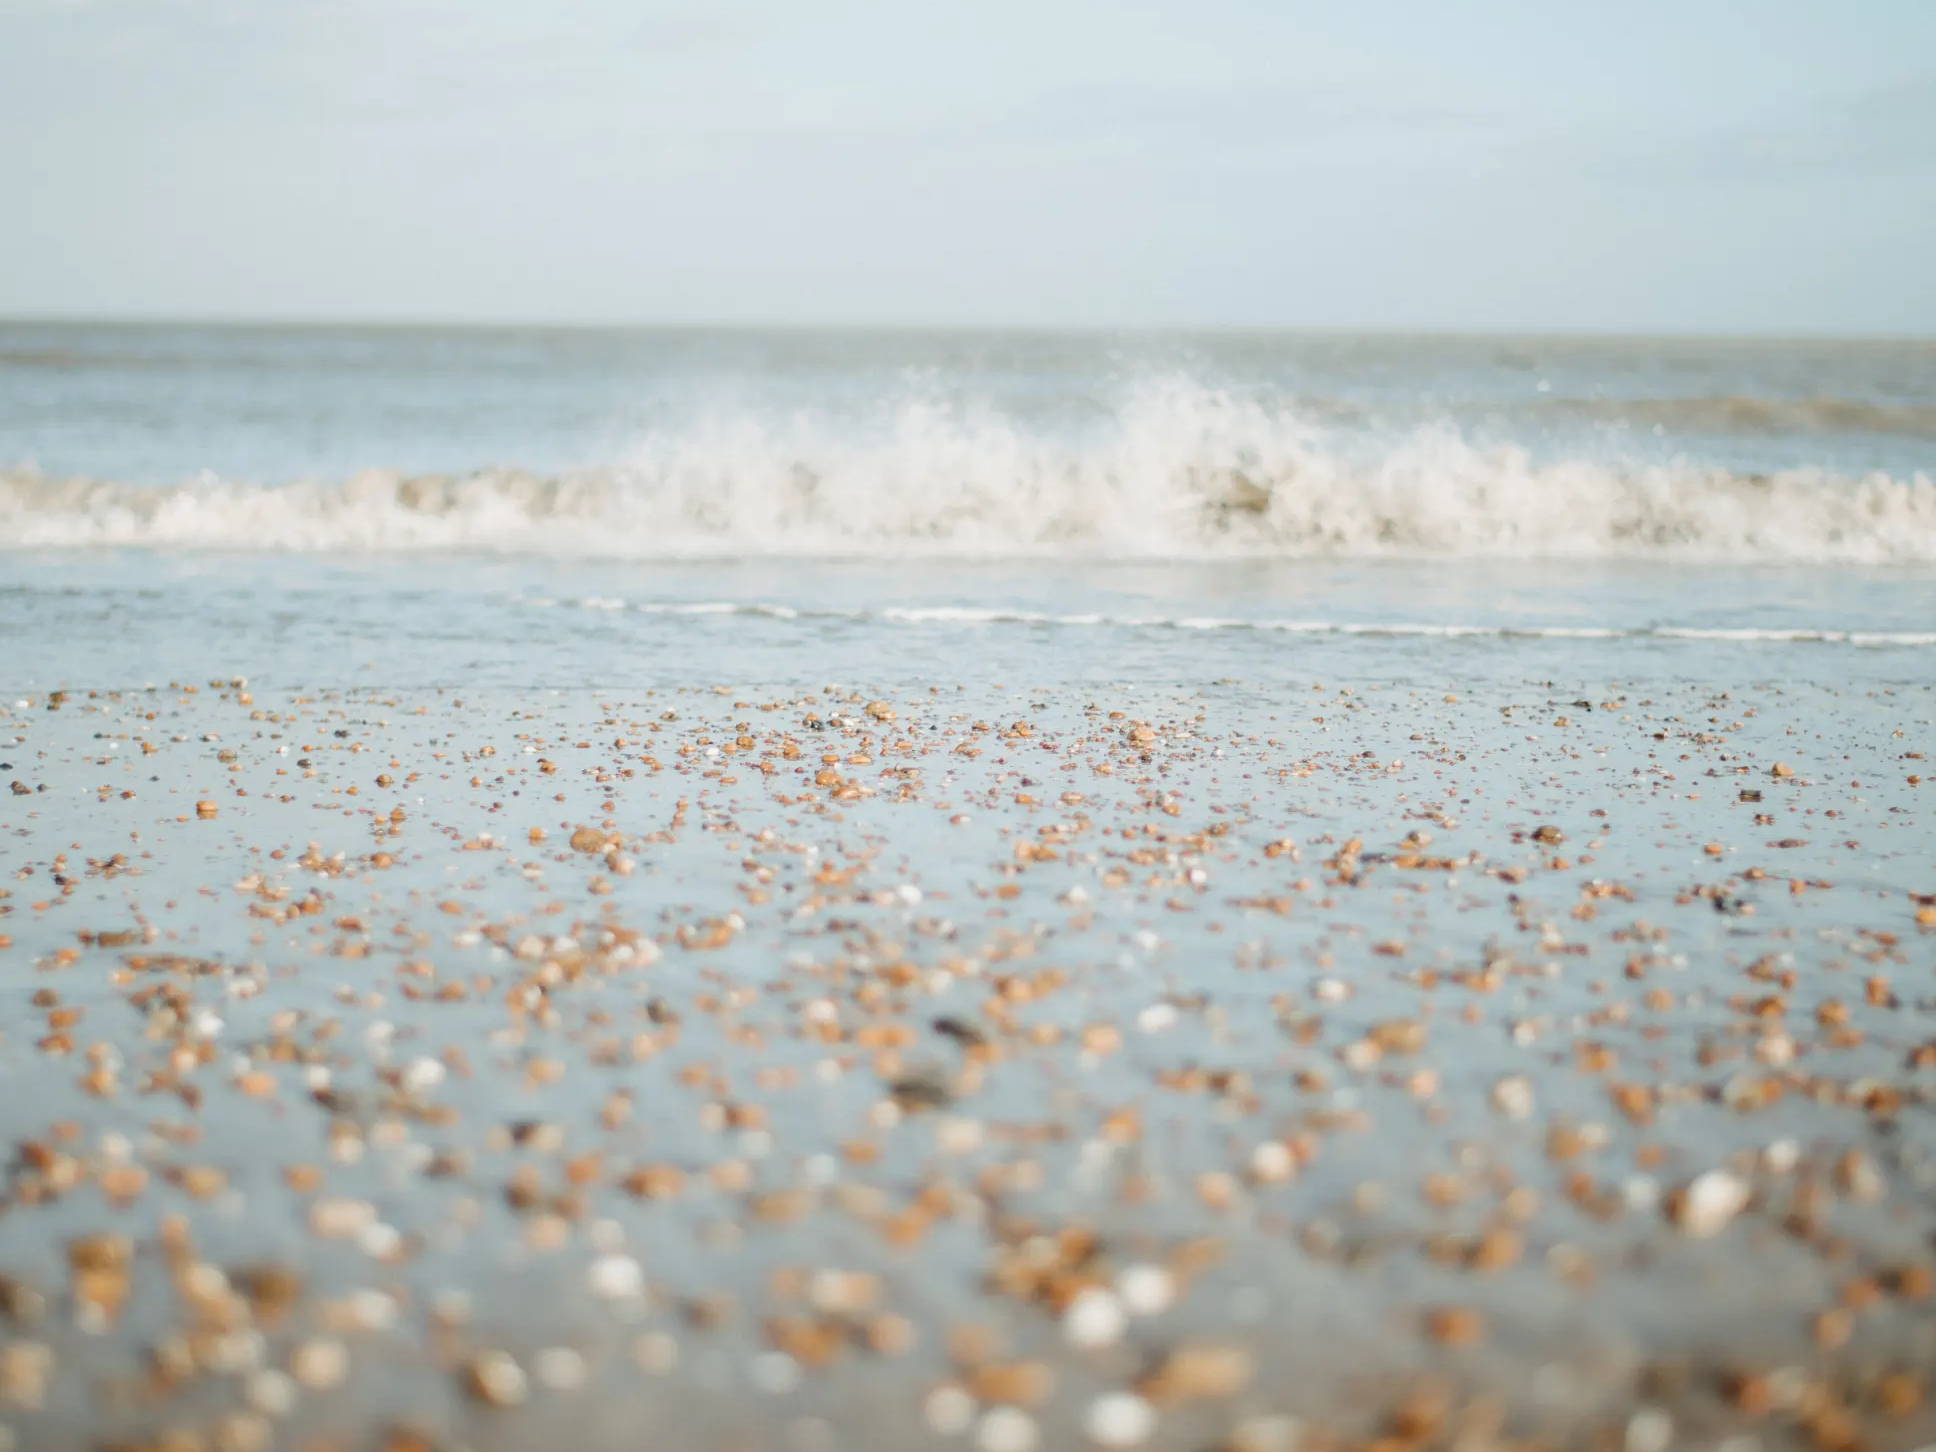 Pebbles and seashells on the shore as wave crash